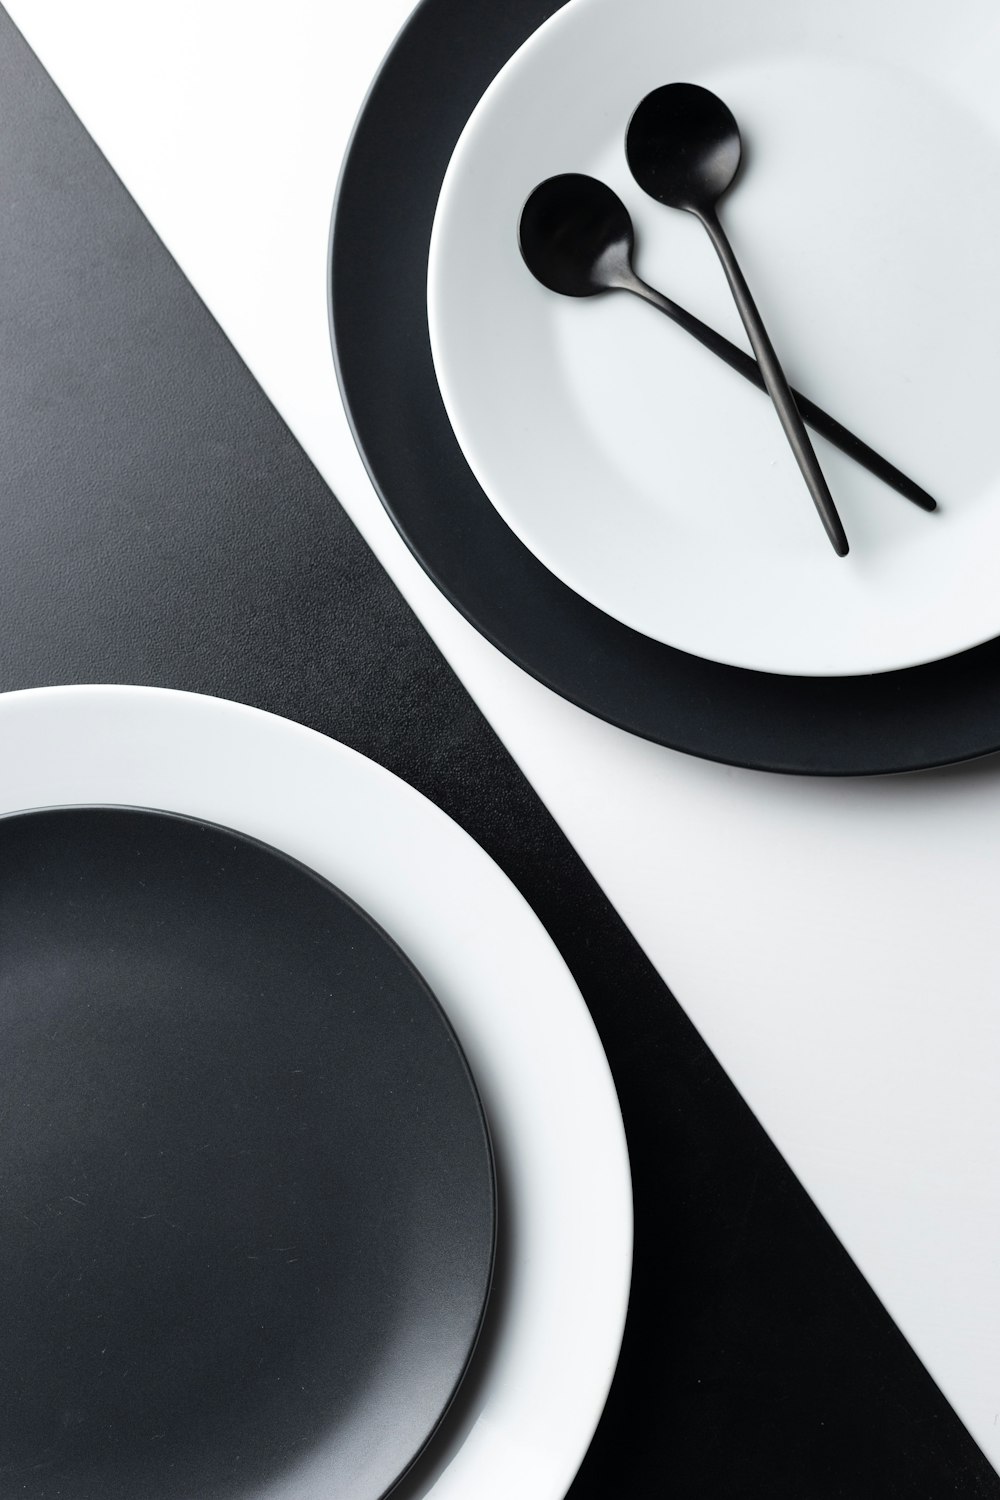 stainless steel fork on white ceramic plate